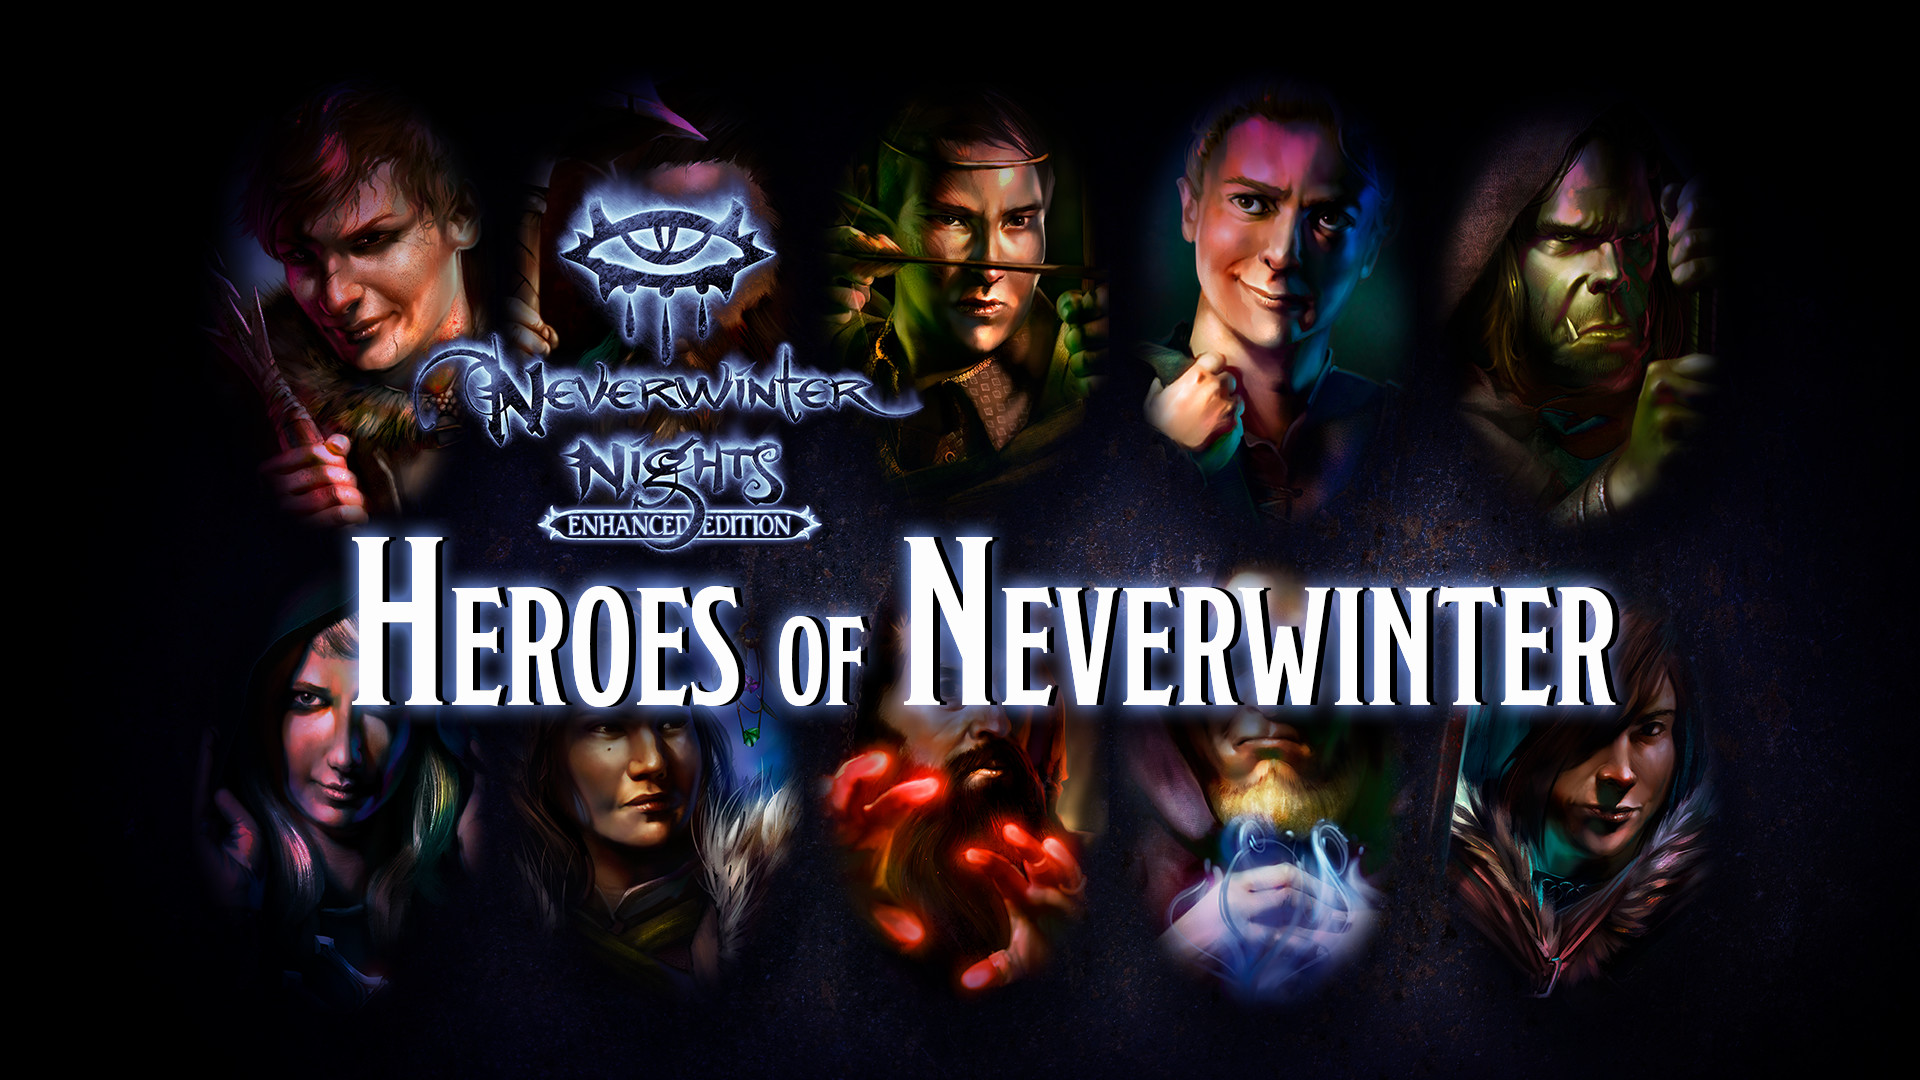 Neverwinter Nights: Enhanced Edition - Heroes of Neverwinter DLC Steam CD Key, $5.64